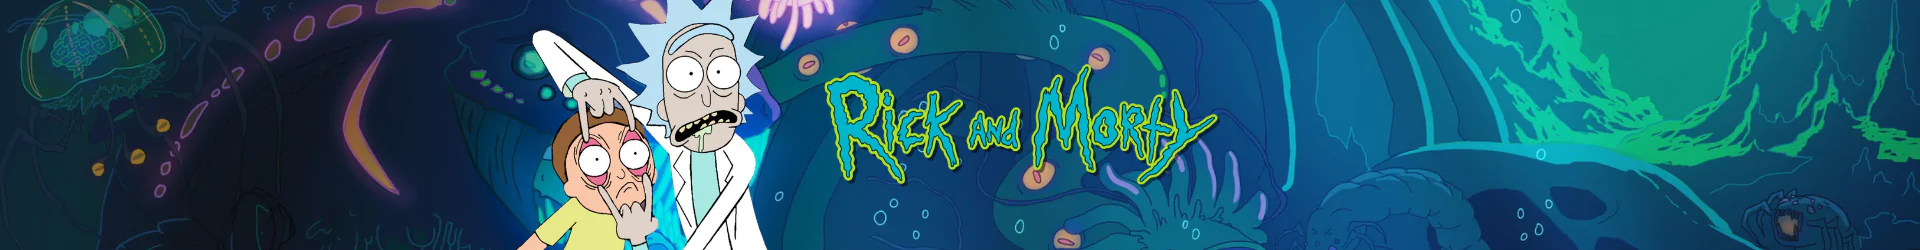 Rick and Morty tassen banner